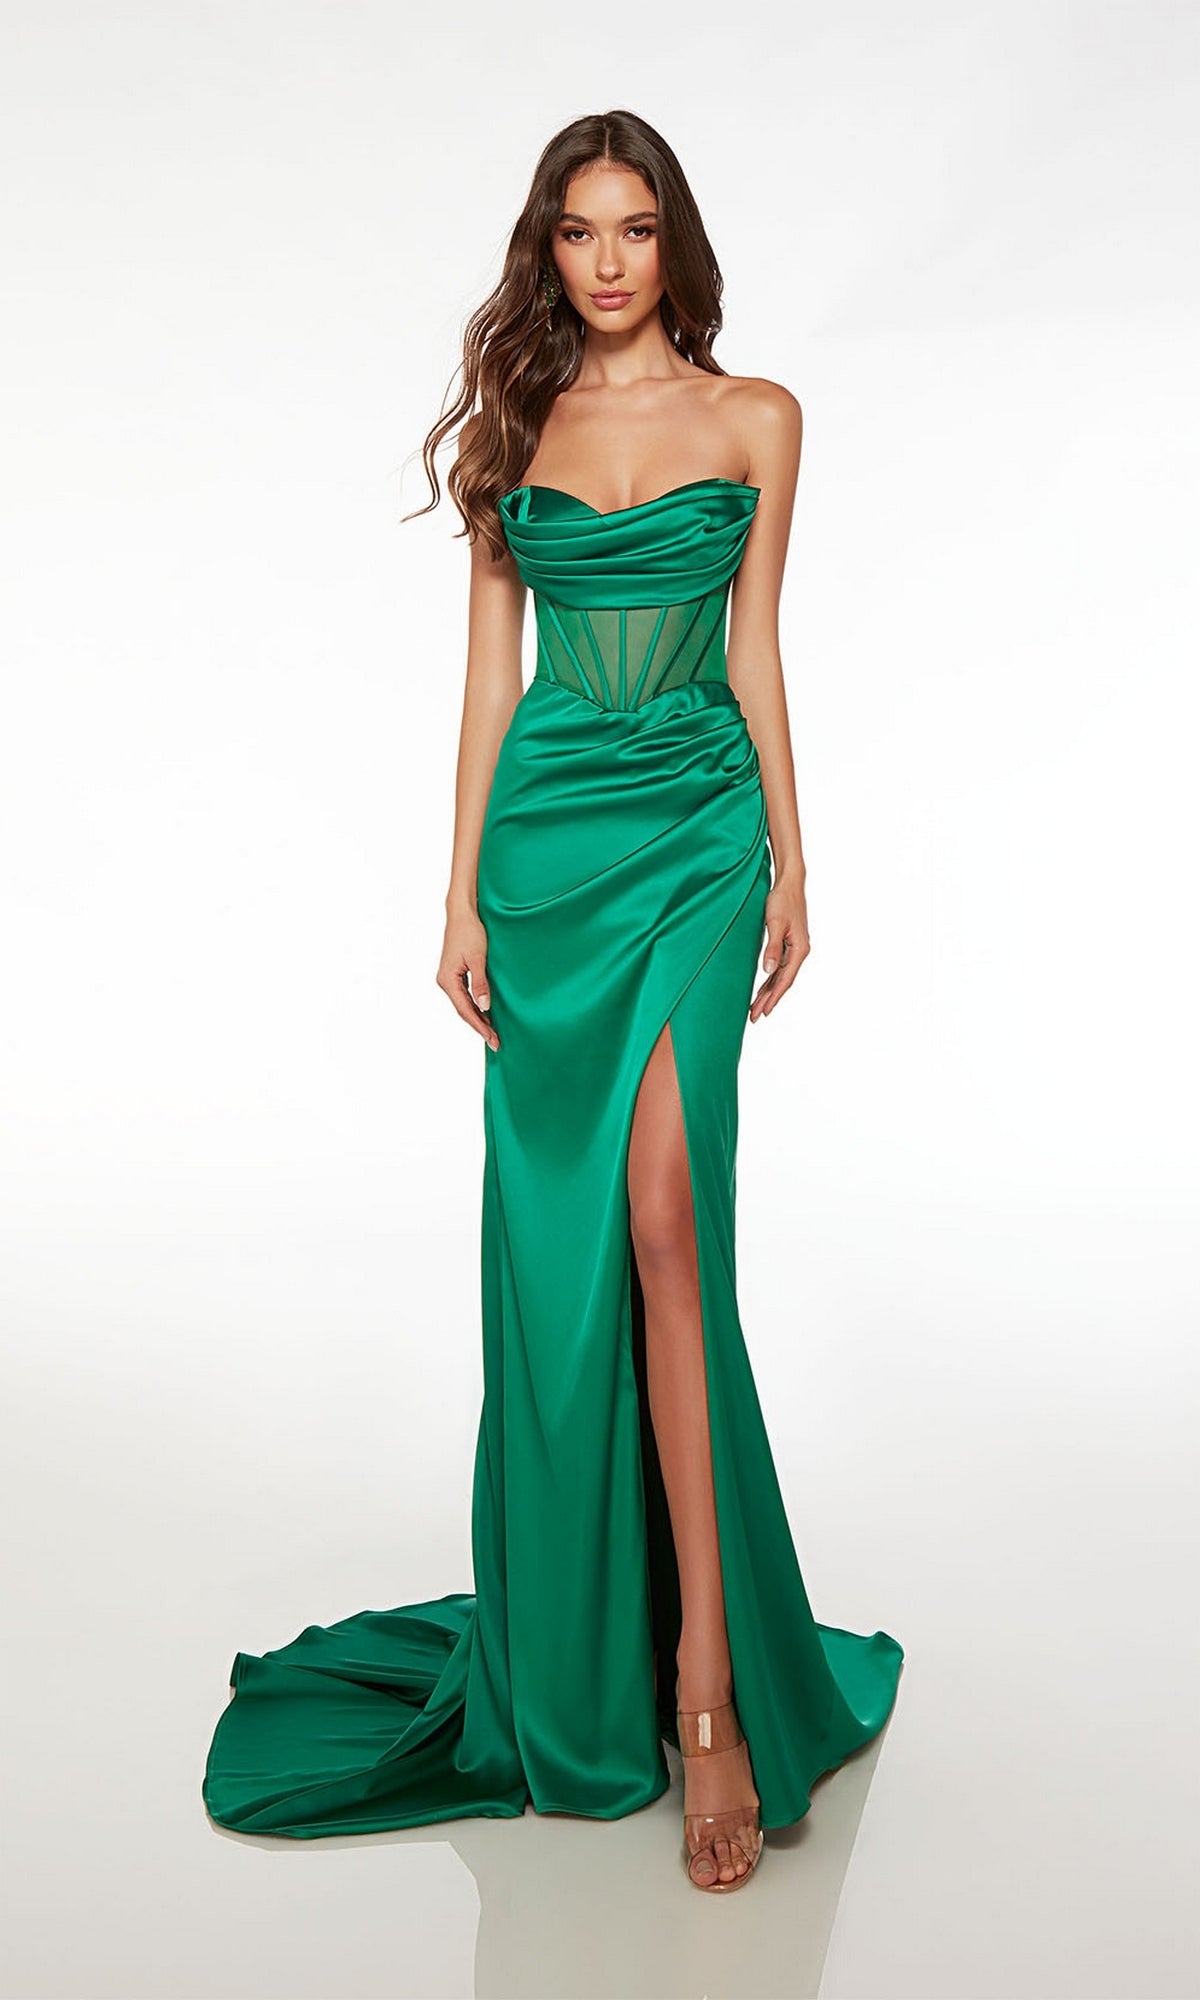 Alyce Long Prom Dress 61572